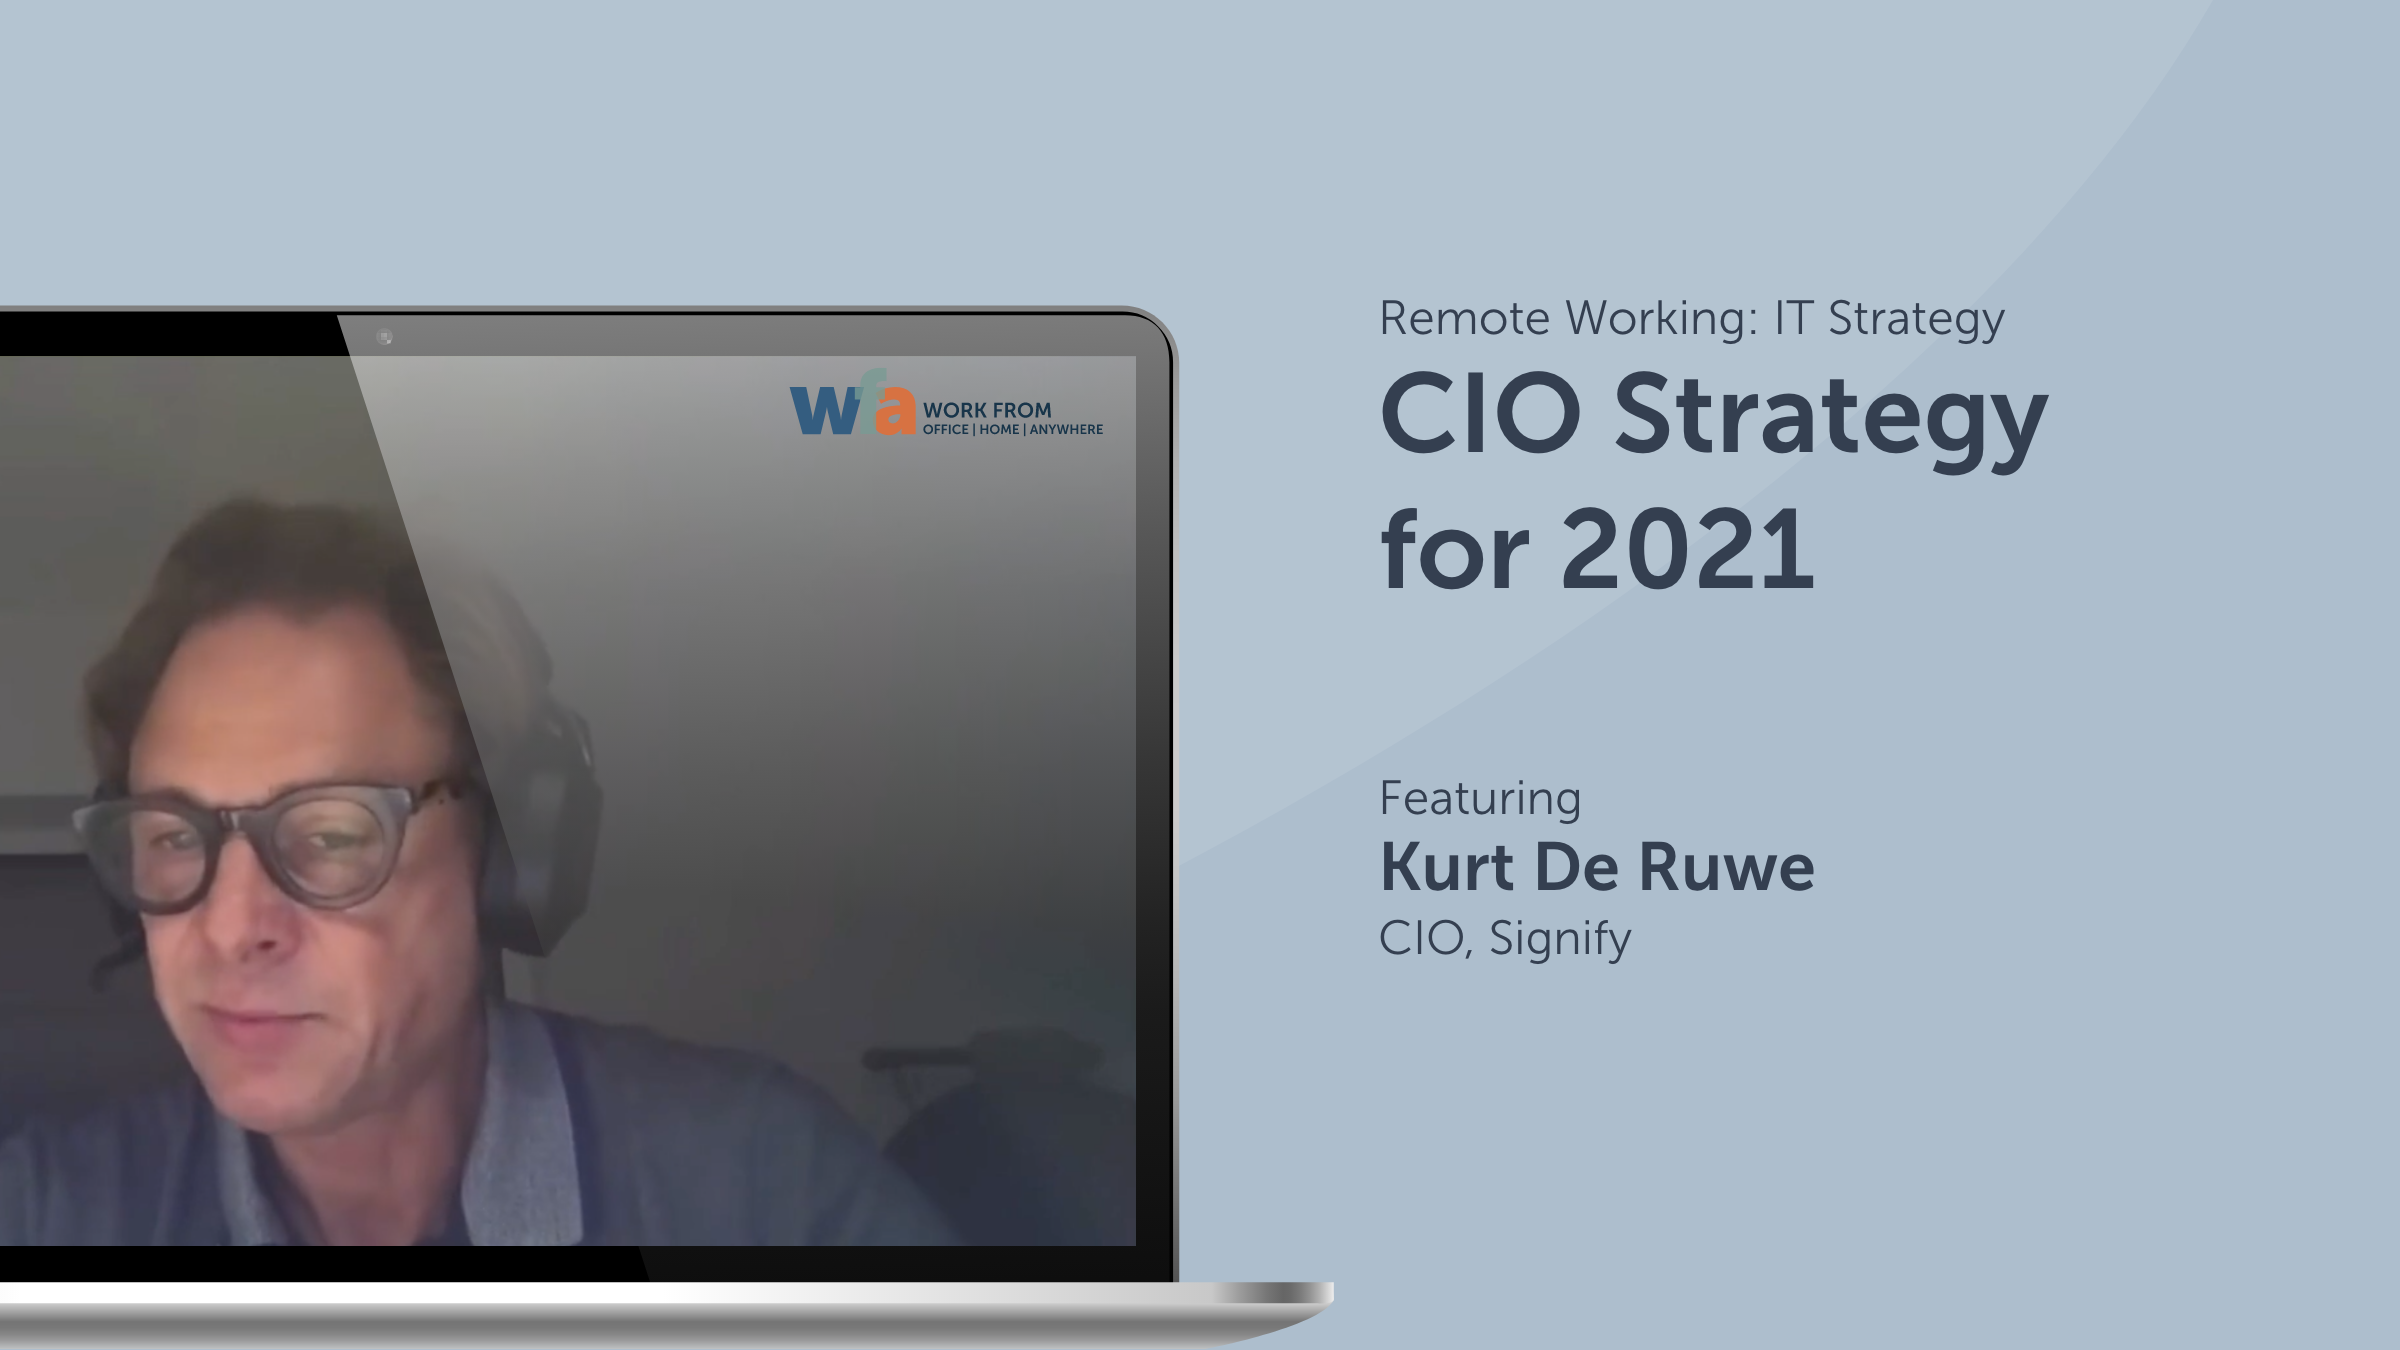 CIO Strategy for 2021 with Kurt De Ruwe, CIO of Signify